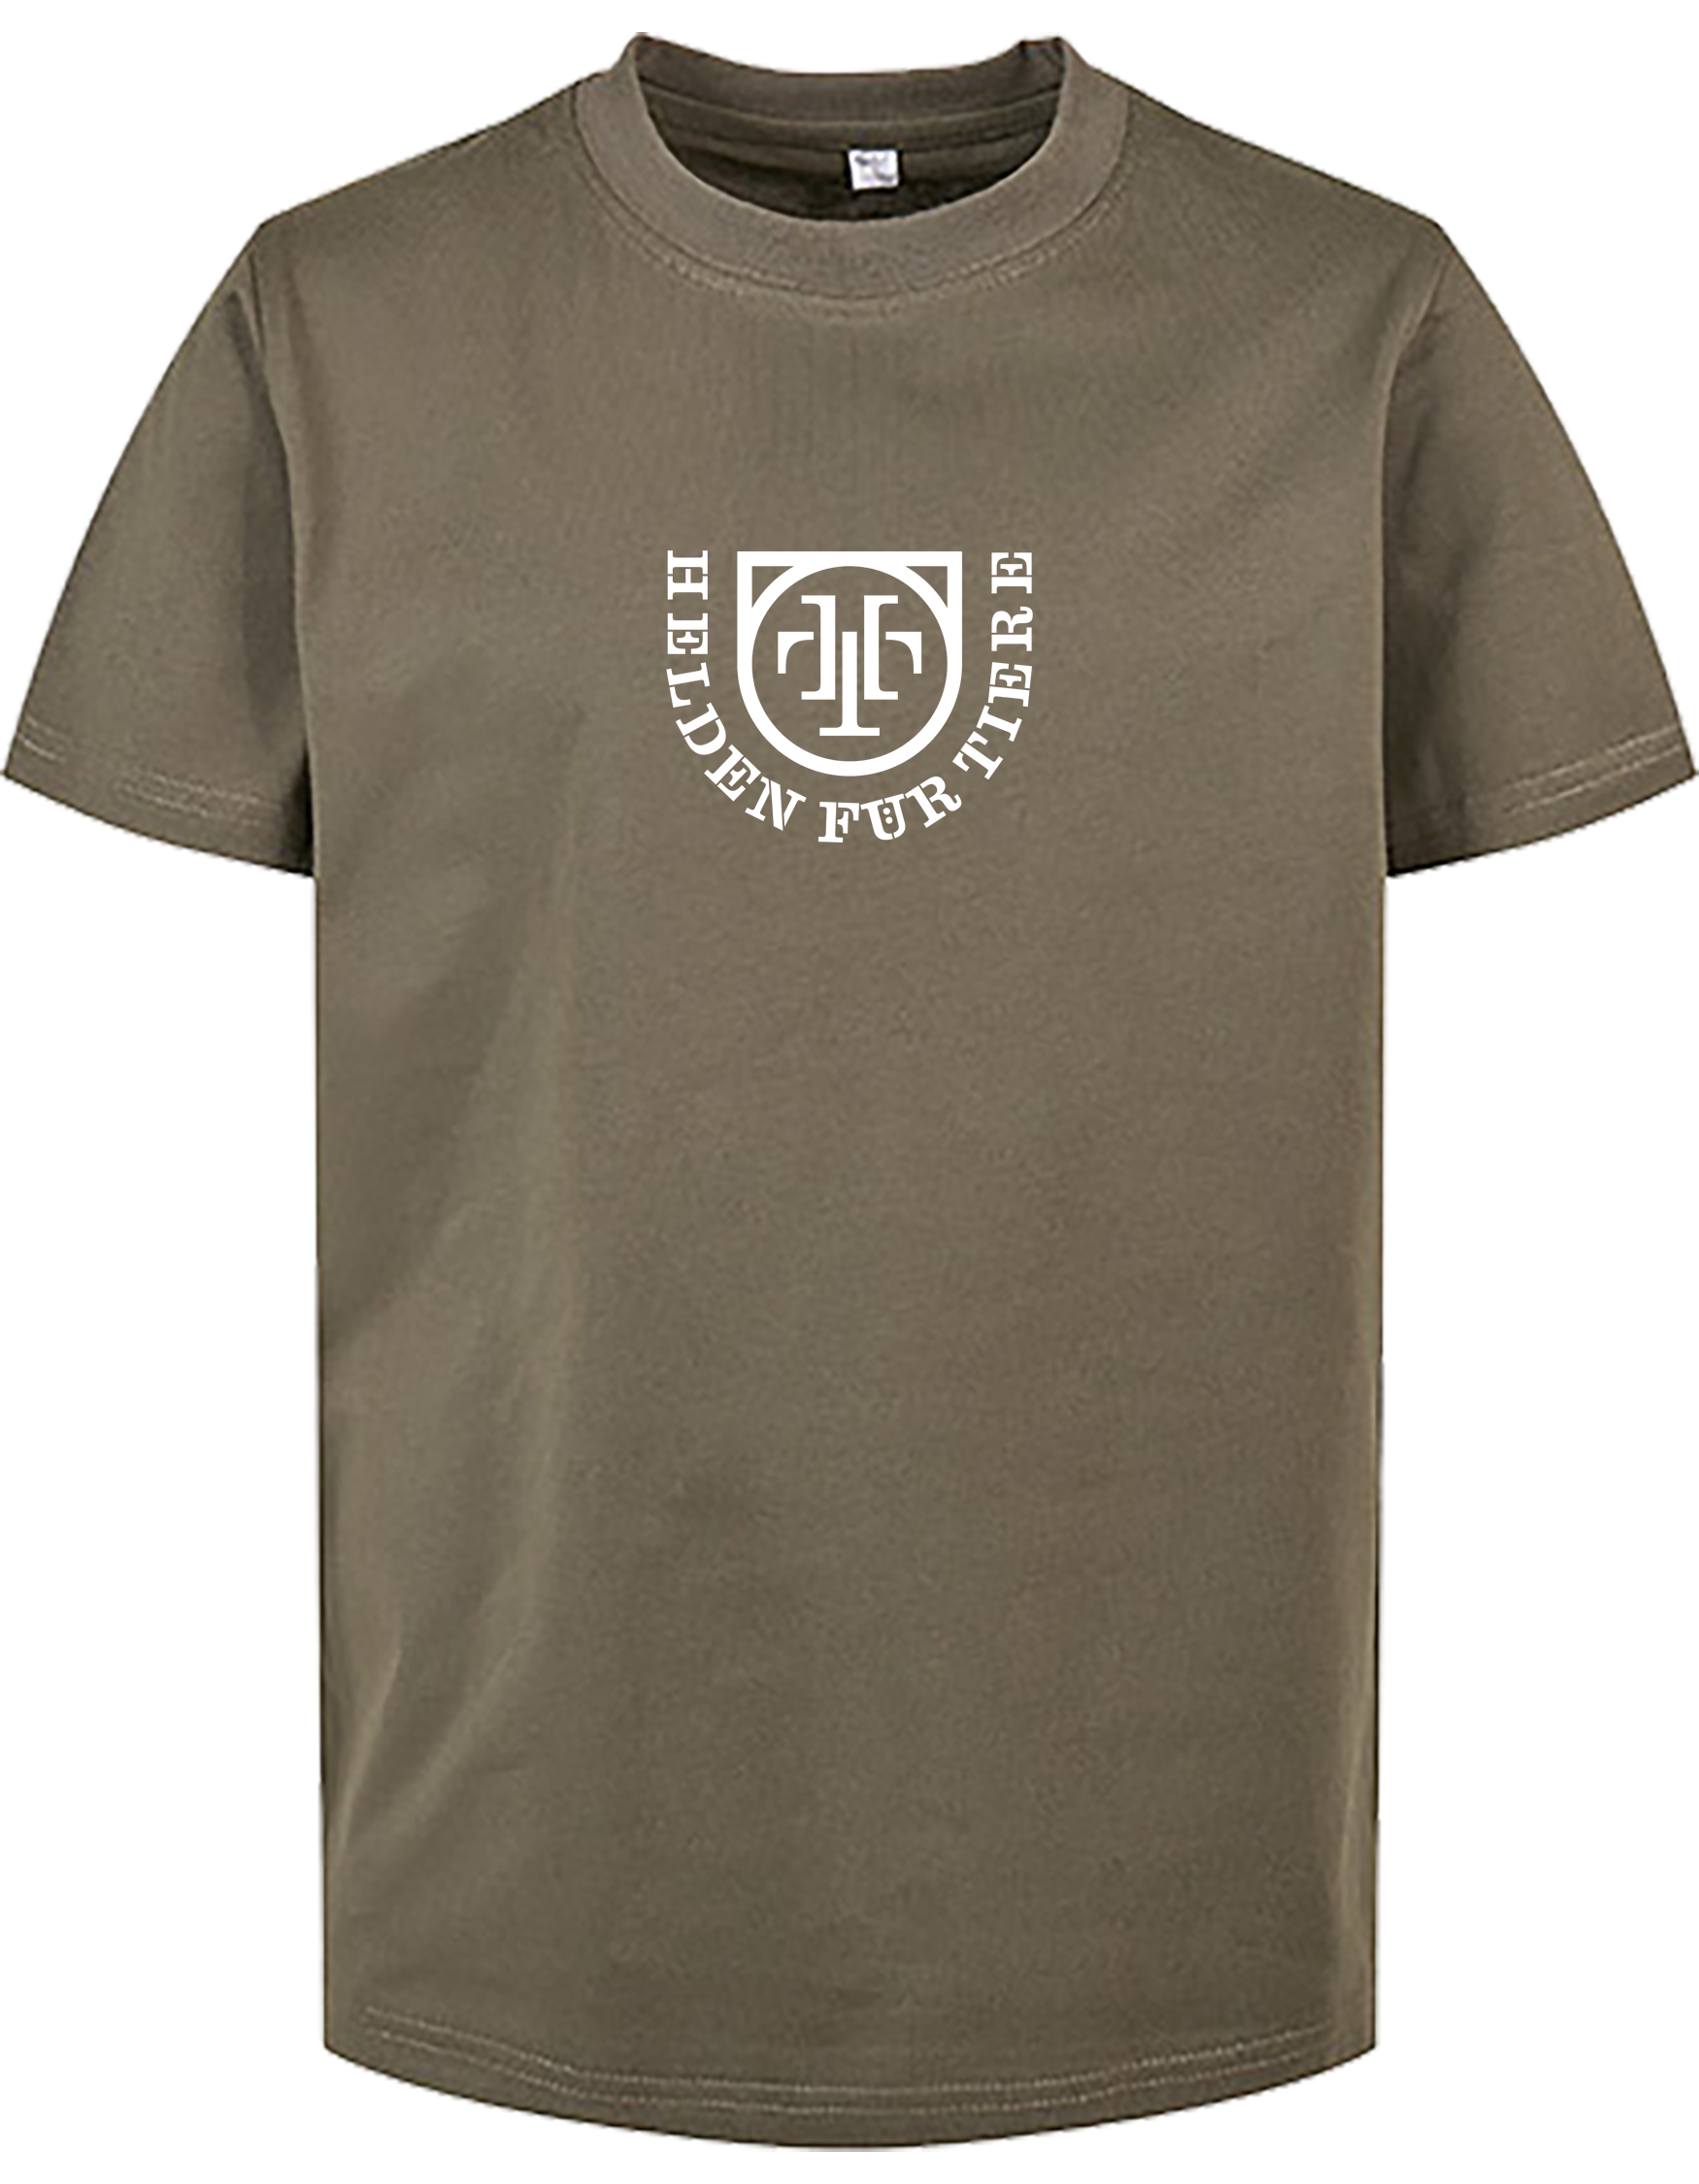 HFT Kids Shirt (olive)